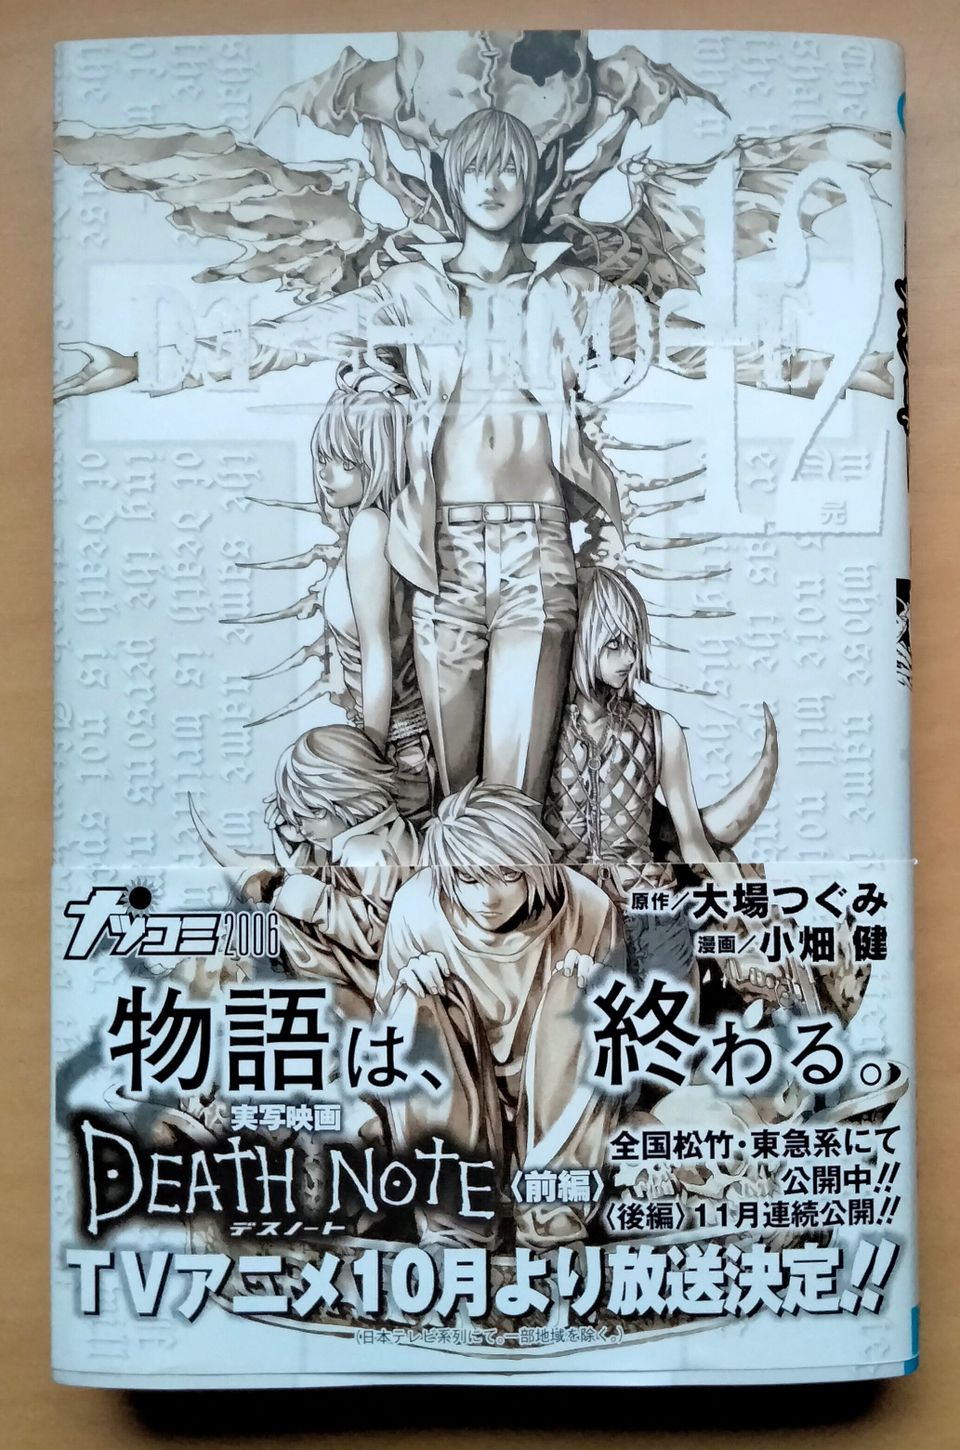 Death Note manga osa 12 (jap)